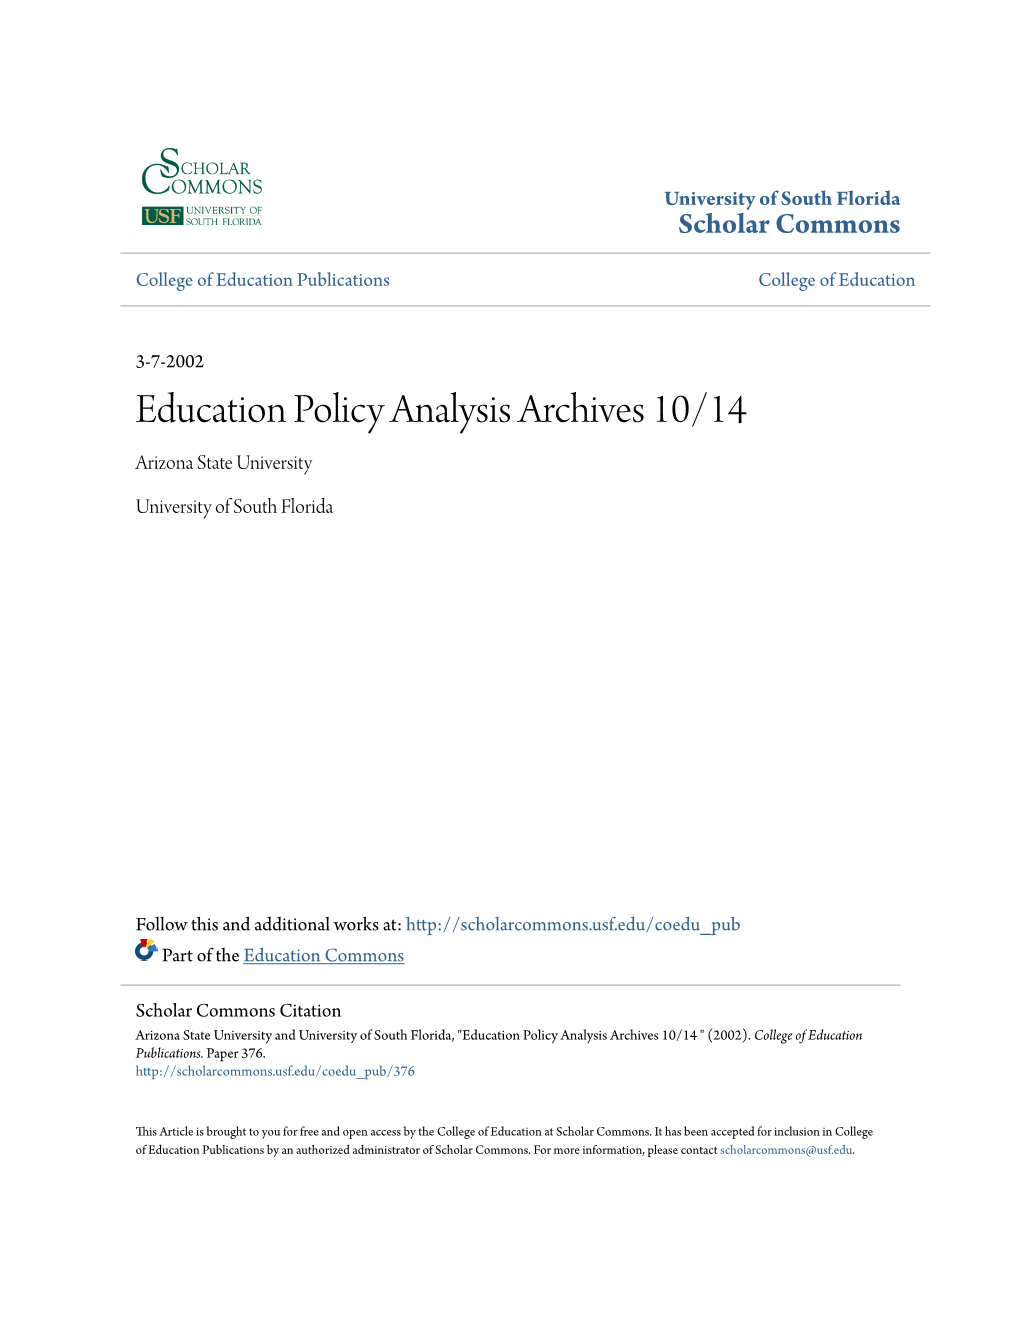 Education Policy Analysis Archives 10/14 Arizona State University